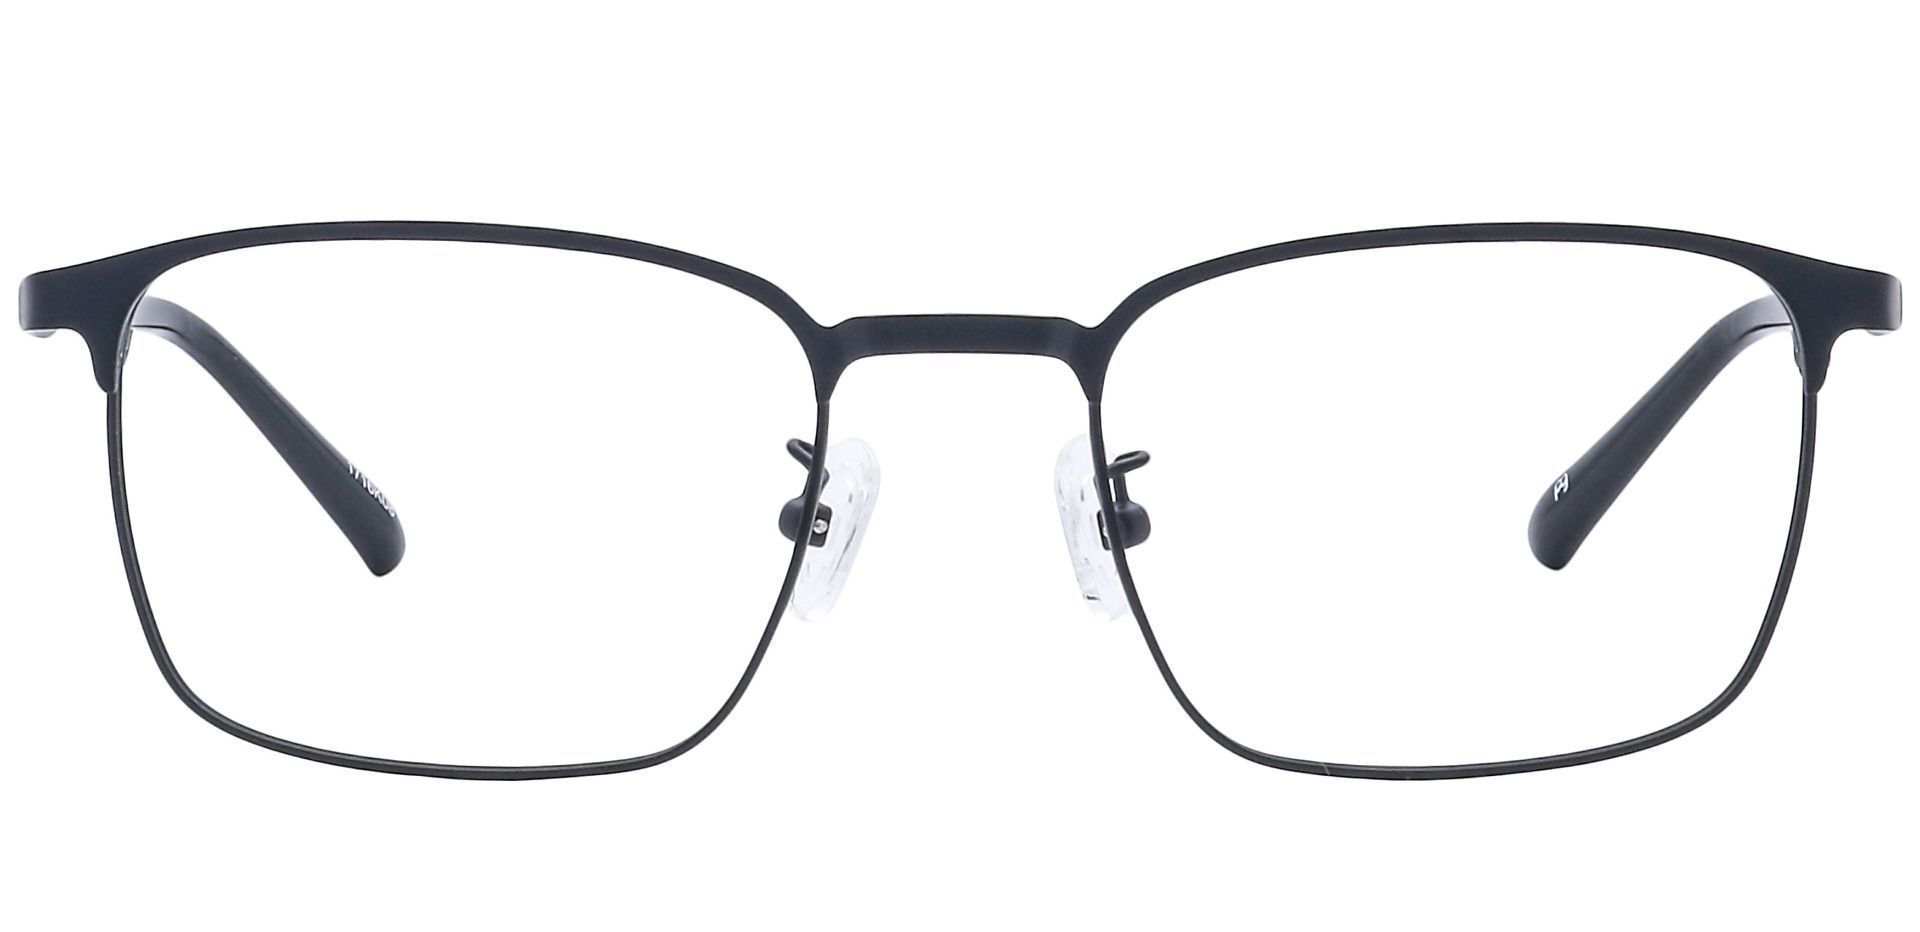 Kingston Square Progressive Glasses - Black